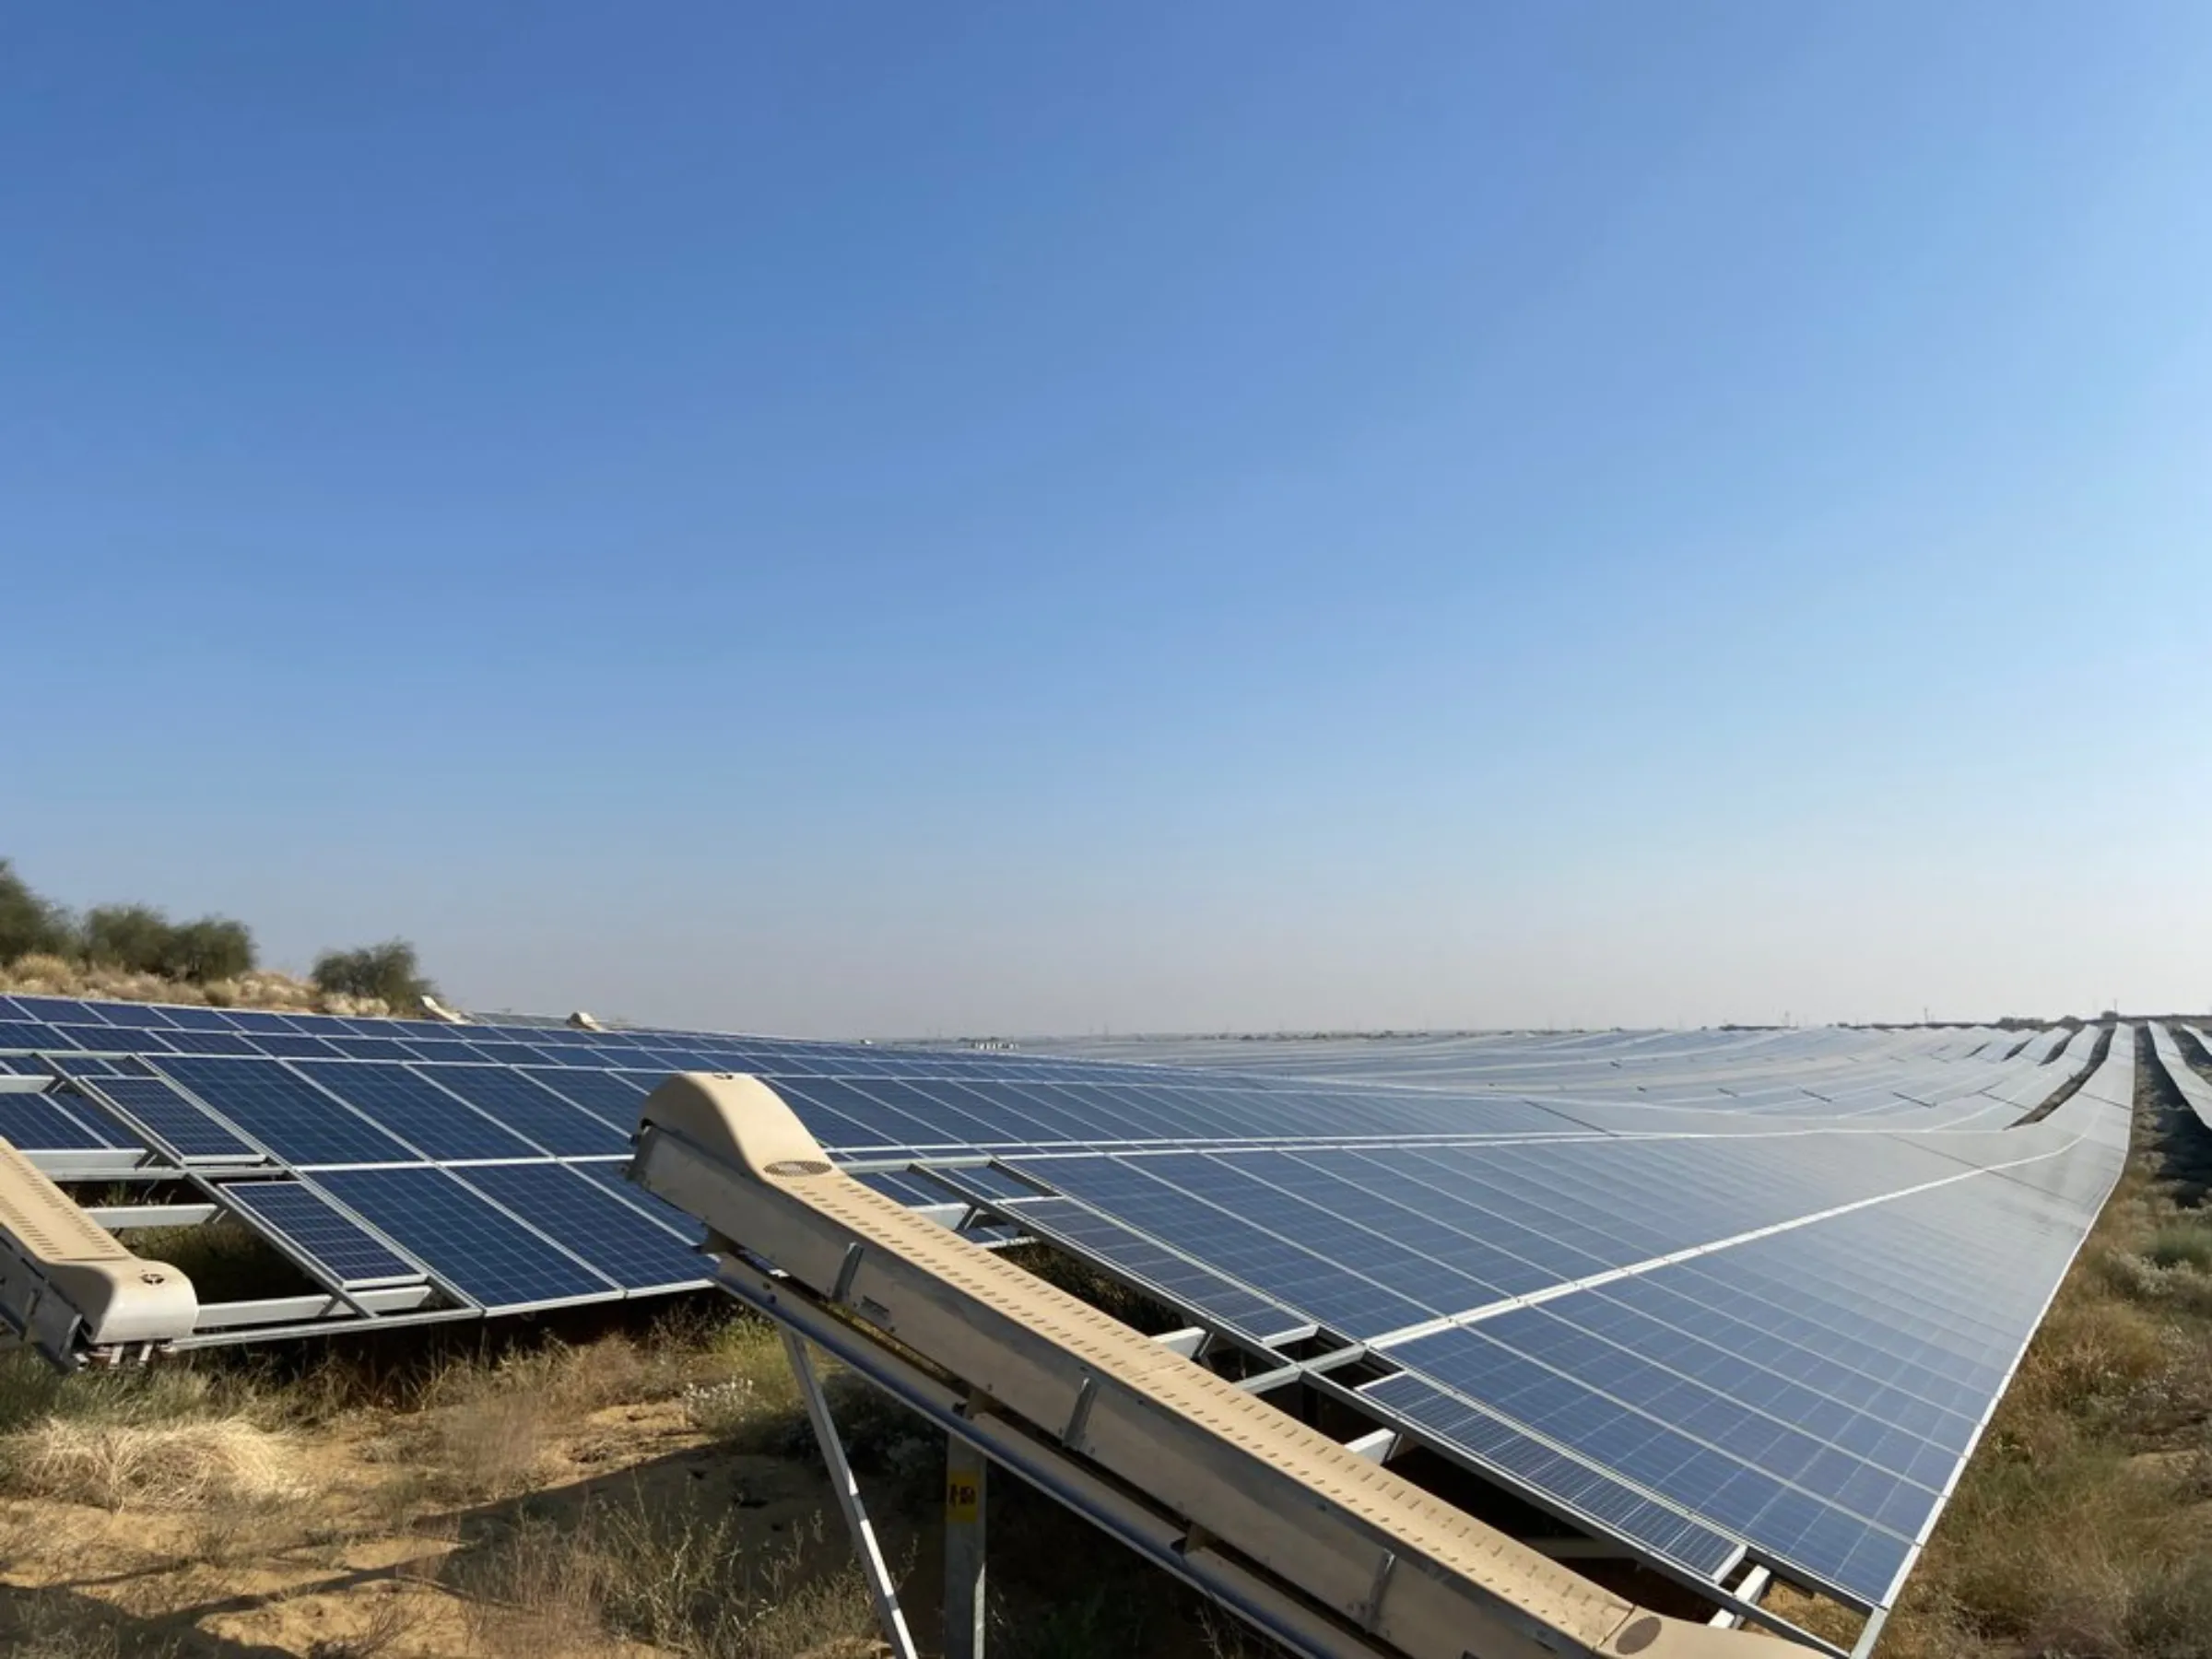 A sea of solar panels at Bhadla Solar Park, Rajasthan, India, December 11, 2021